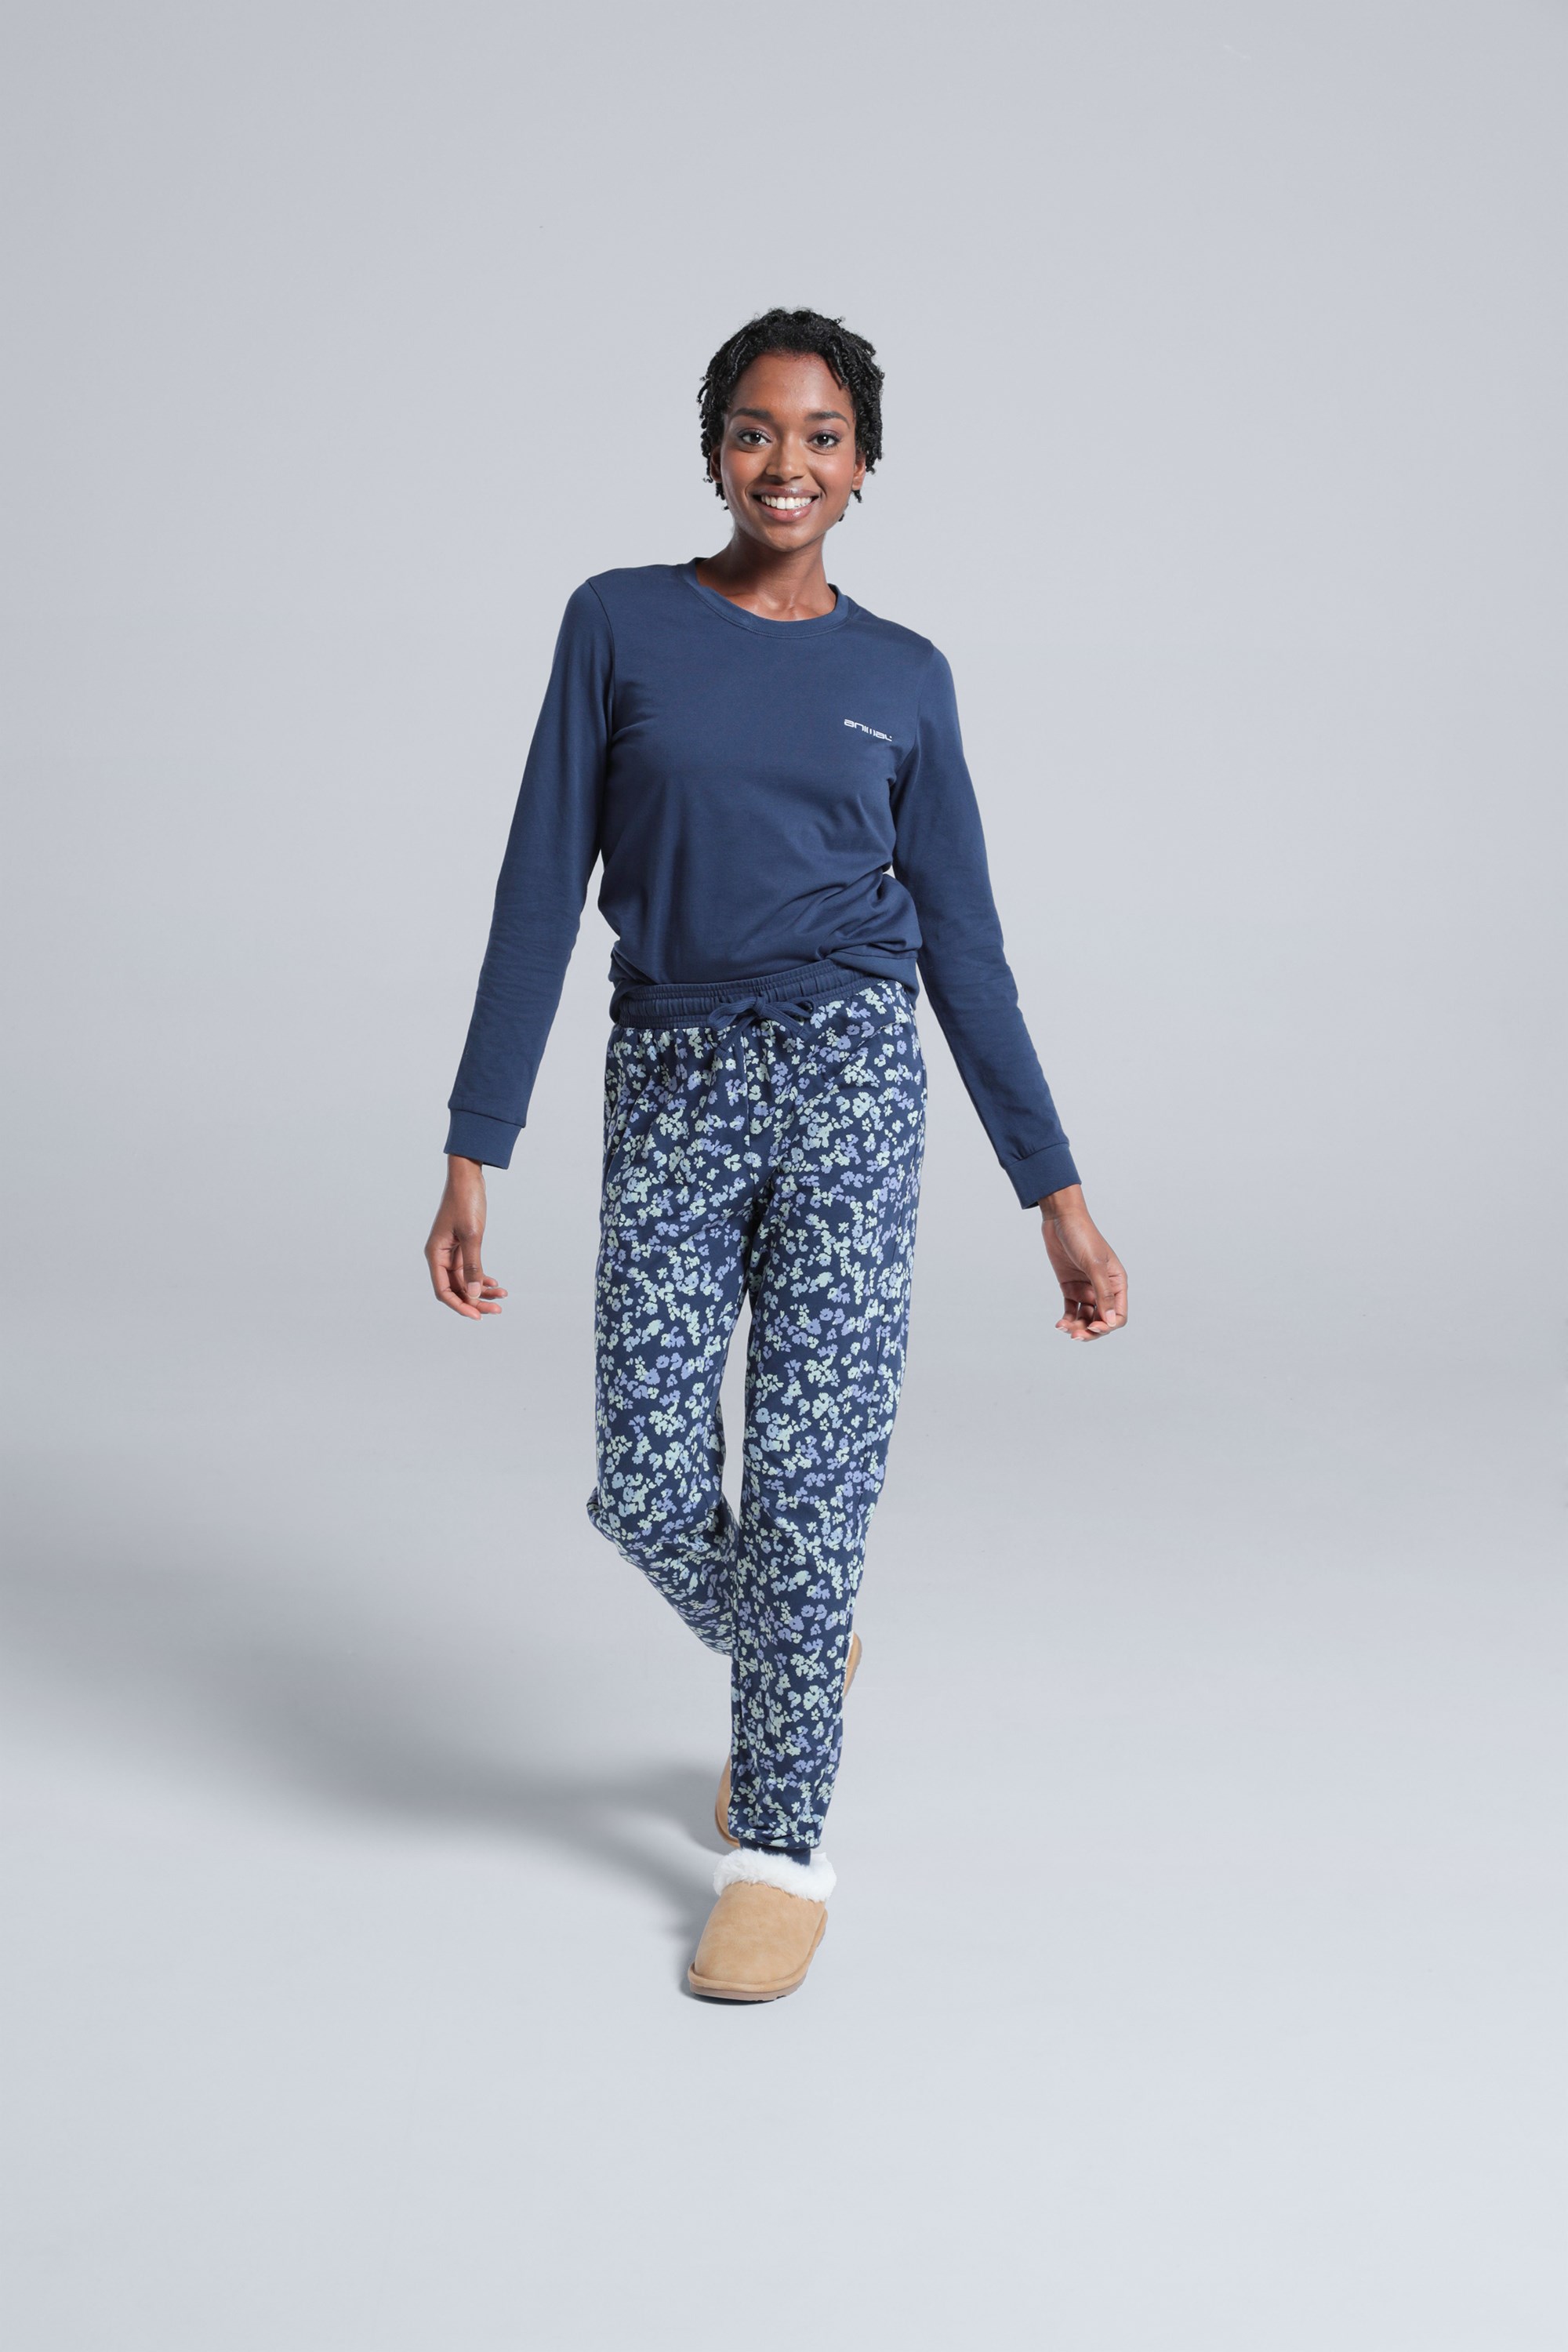 Tessie Confetti Oat Pyjama Trousers | PJ Trousers – Tessie Clothing